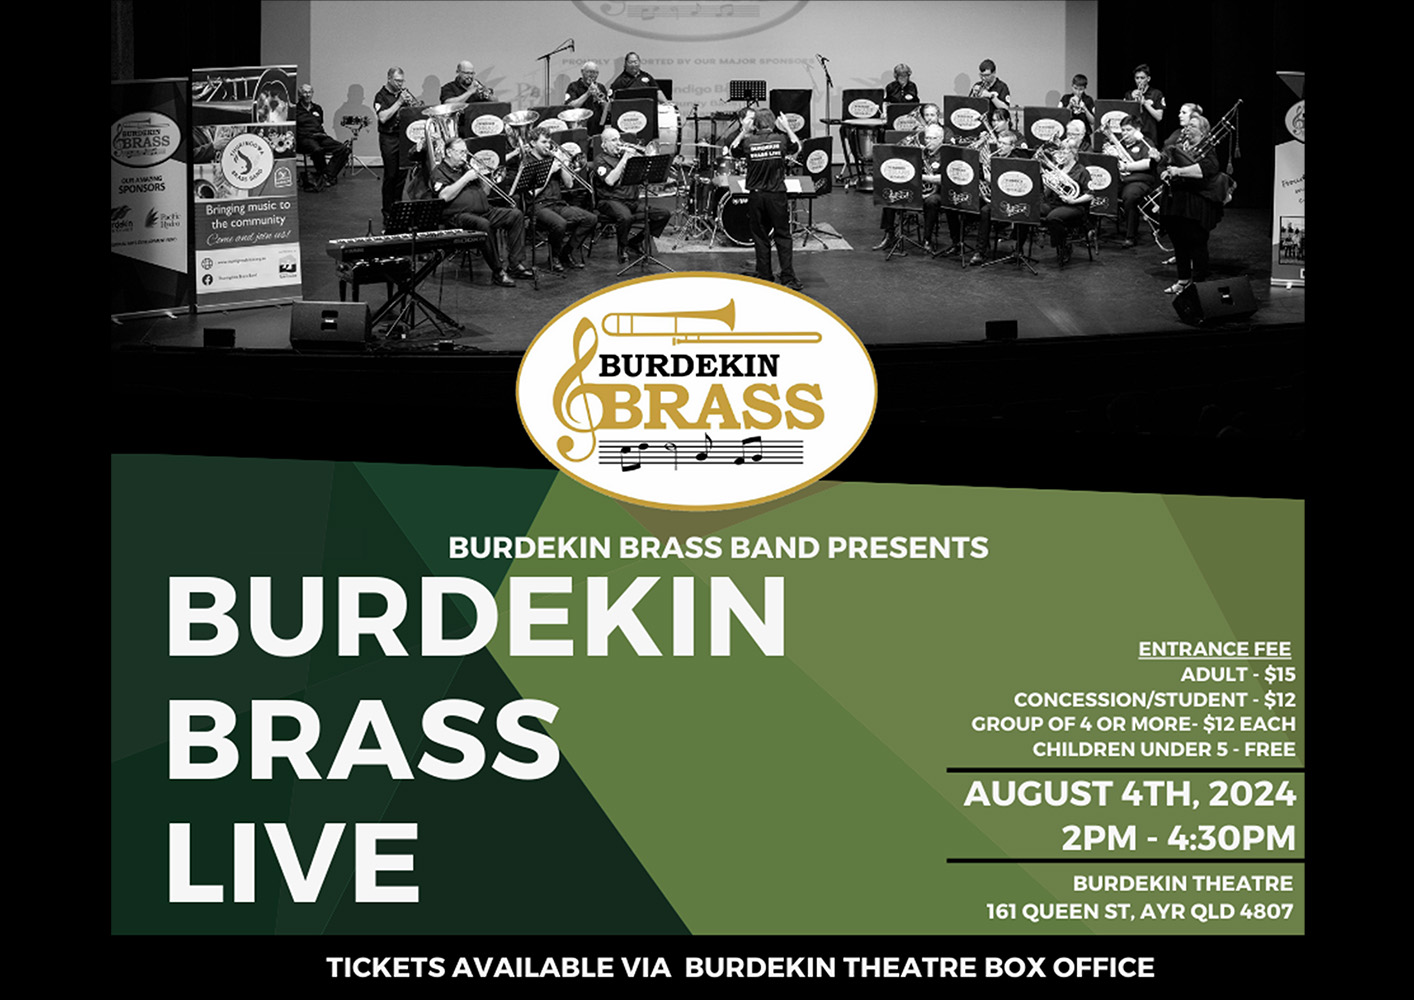 Burdekin Brass Live Image